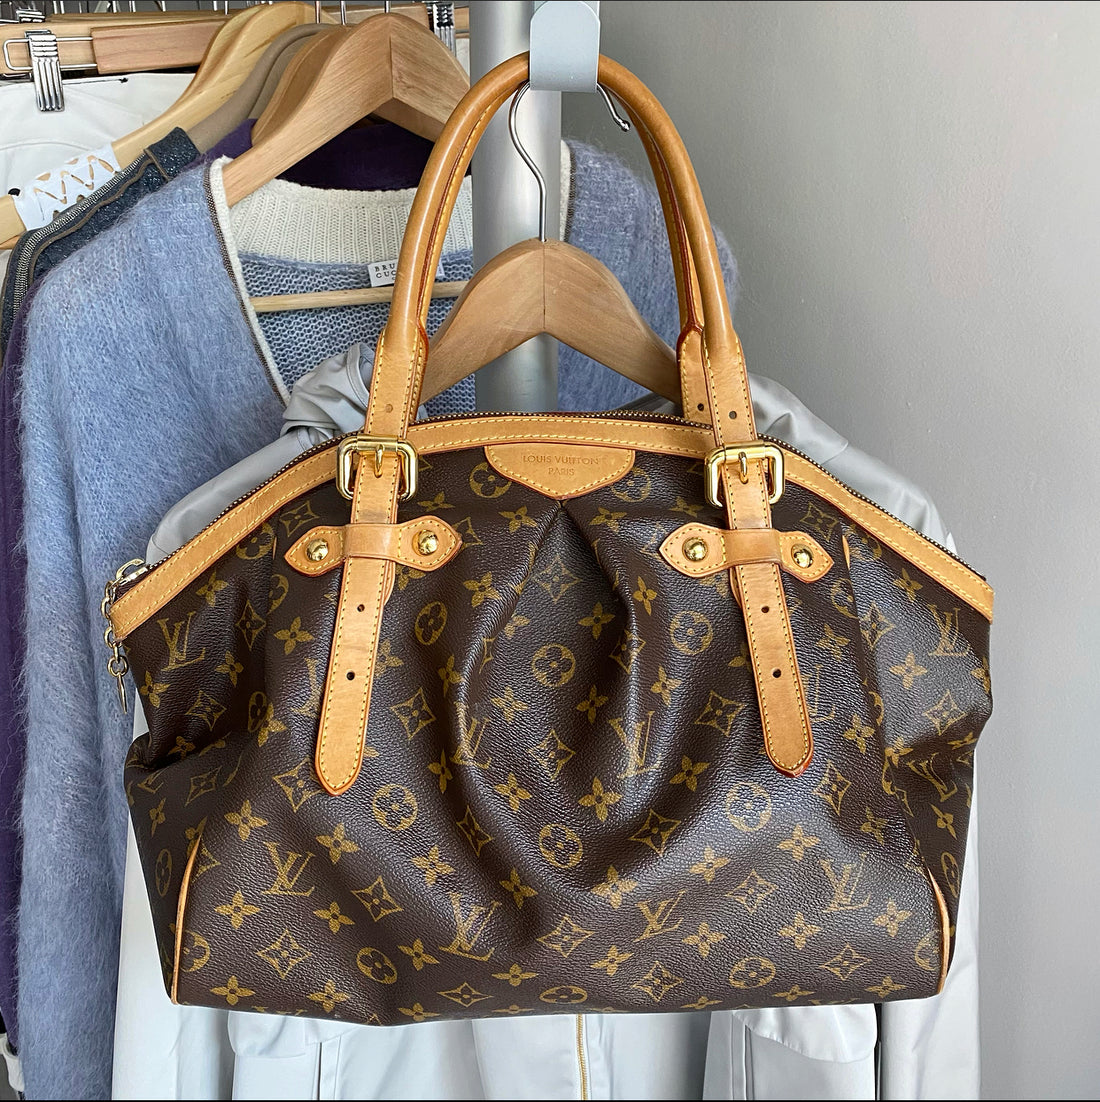 LV Monogram Tivoli Bag - clothing & accessories - by owner